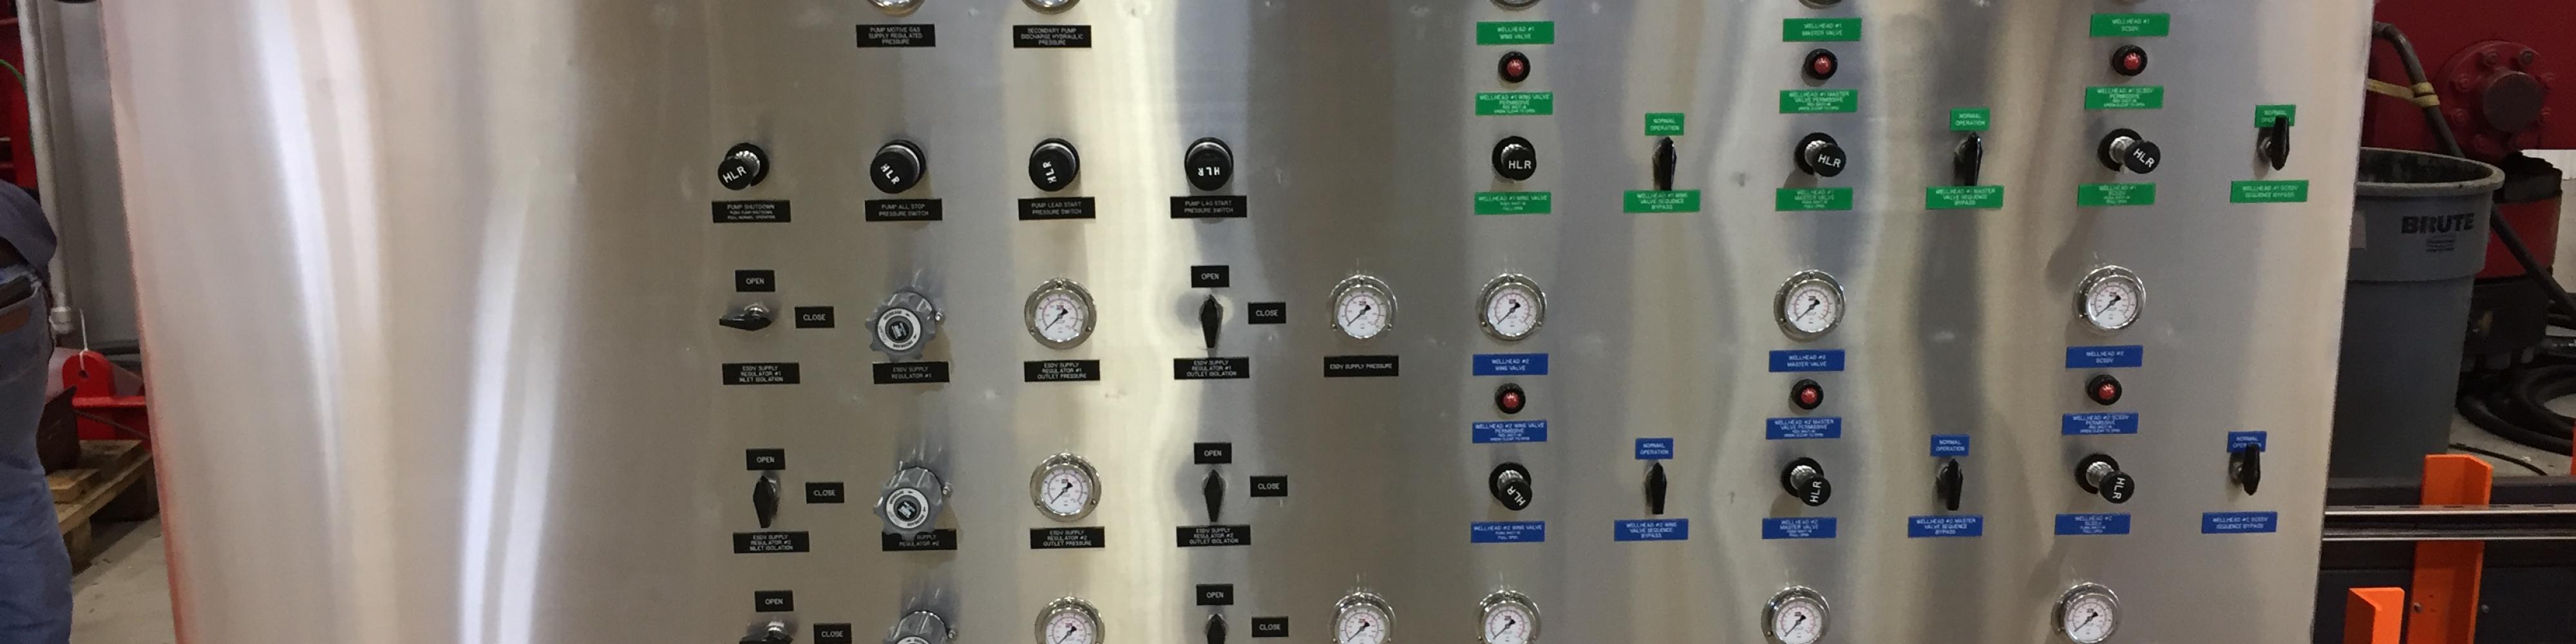 Wellhead Control Panel